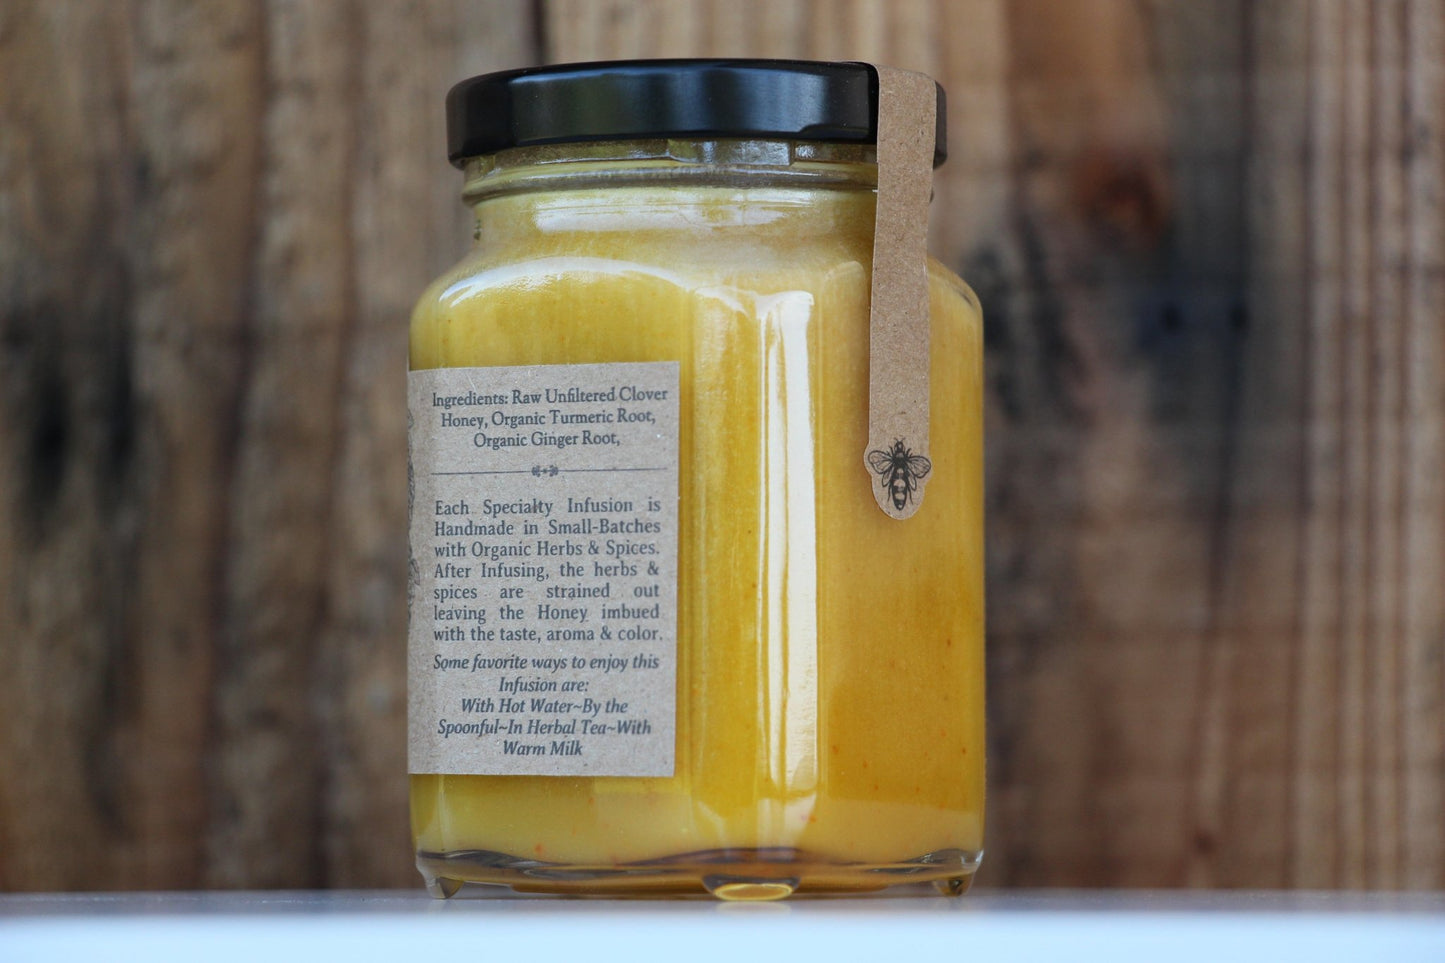 Turmeric Ginger Infused Raw Honey - Blue Sage Family Farm